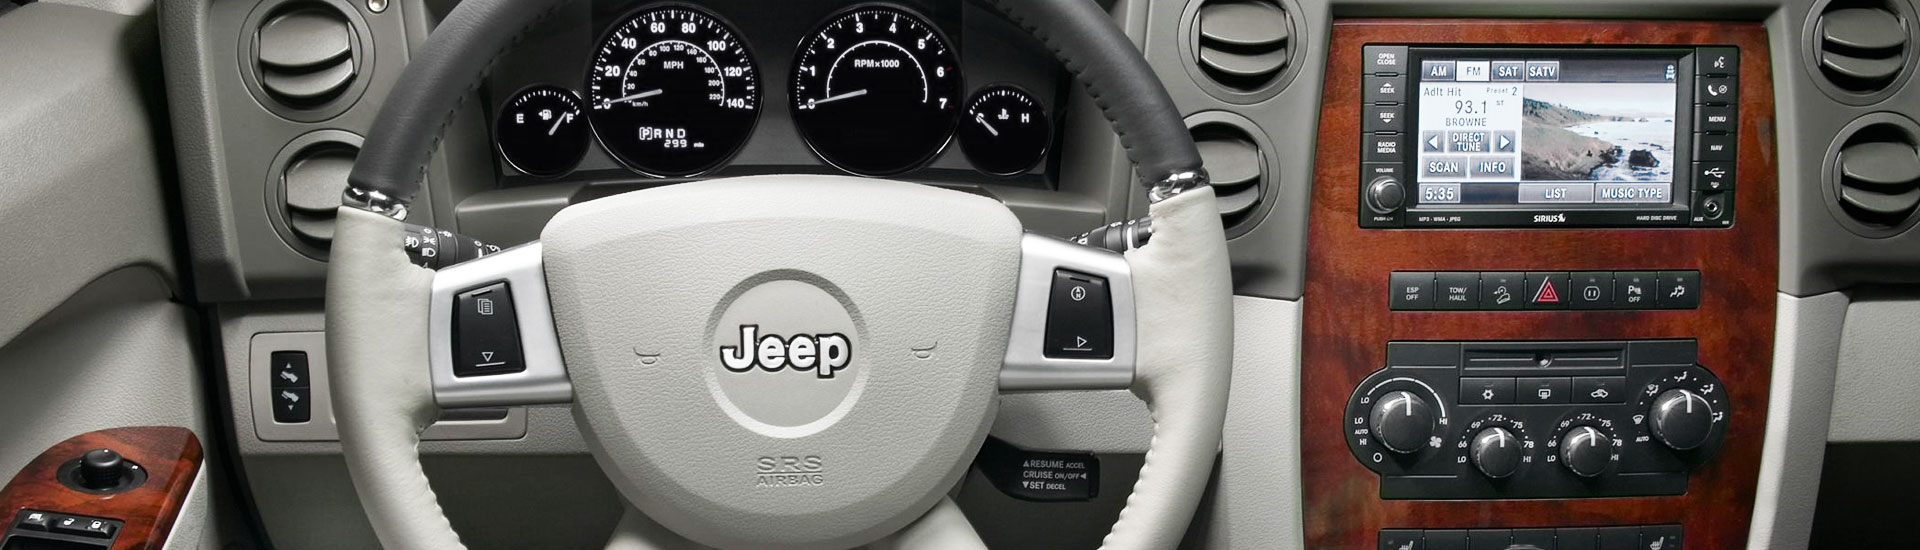 2022 Jeep Compass Custom Dash Kits